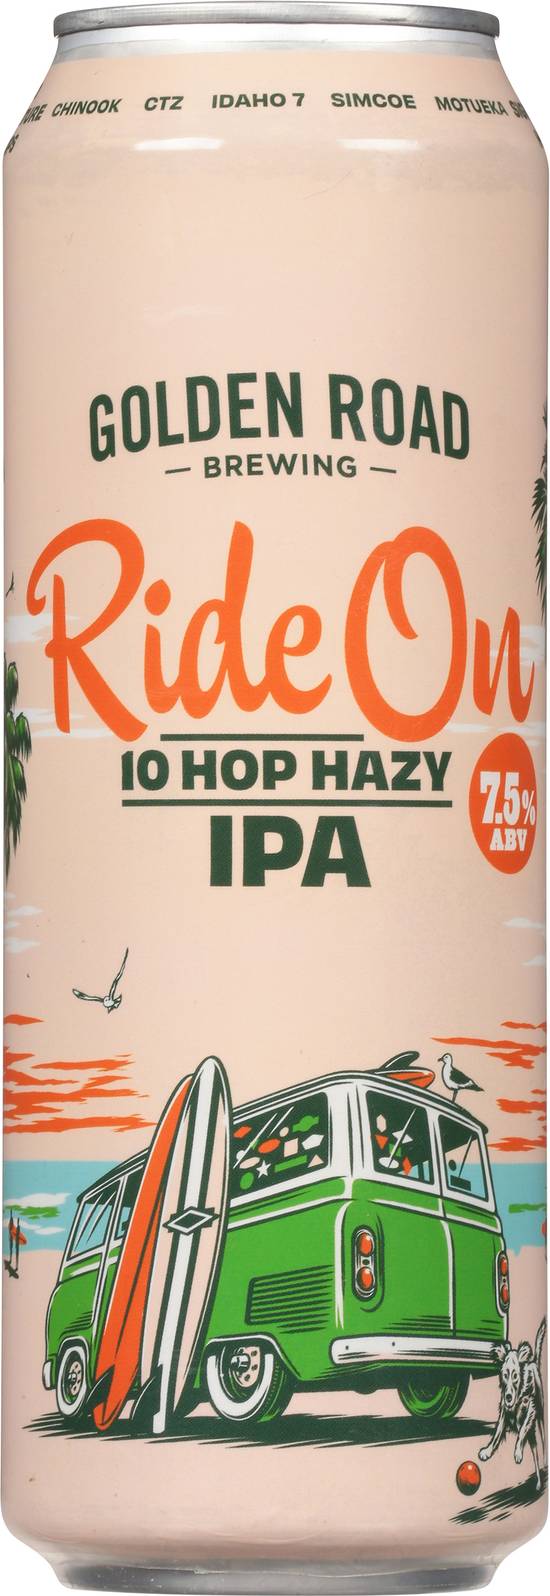 Golden Road Brewing Road Ride on 10 Hop Hazy Ipa Beer (19.2 fl oz)